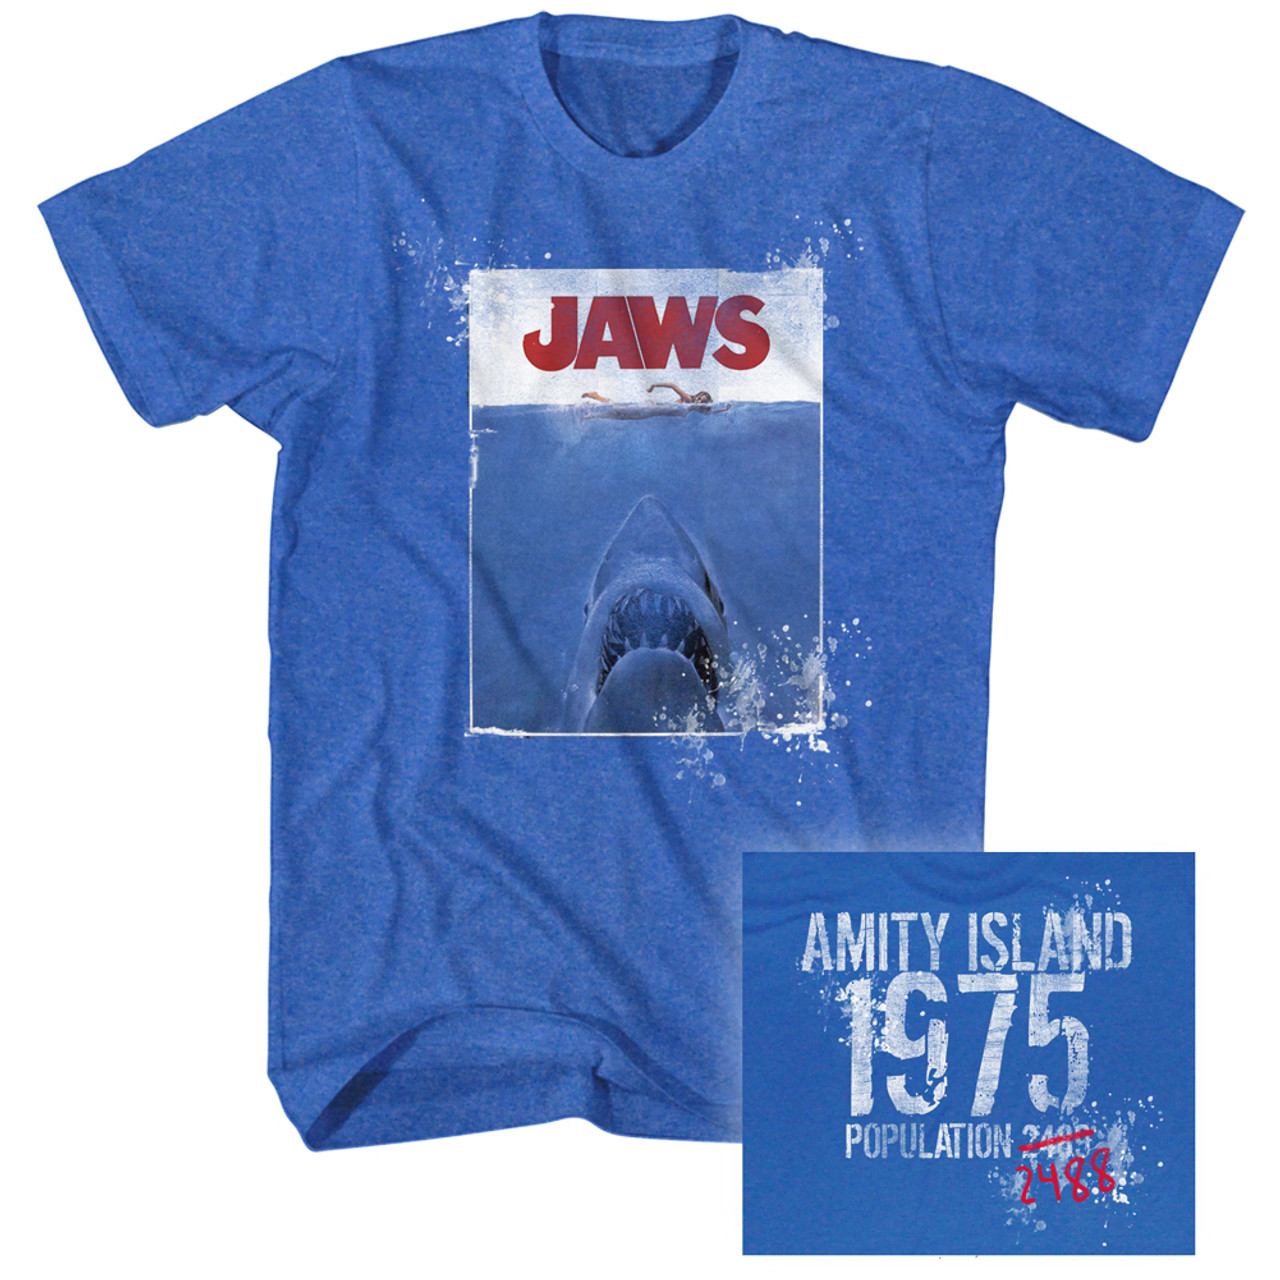 Jaws T-Shirt Size: XX-Large Blue